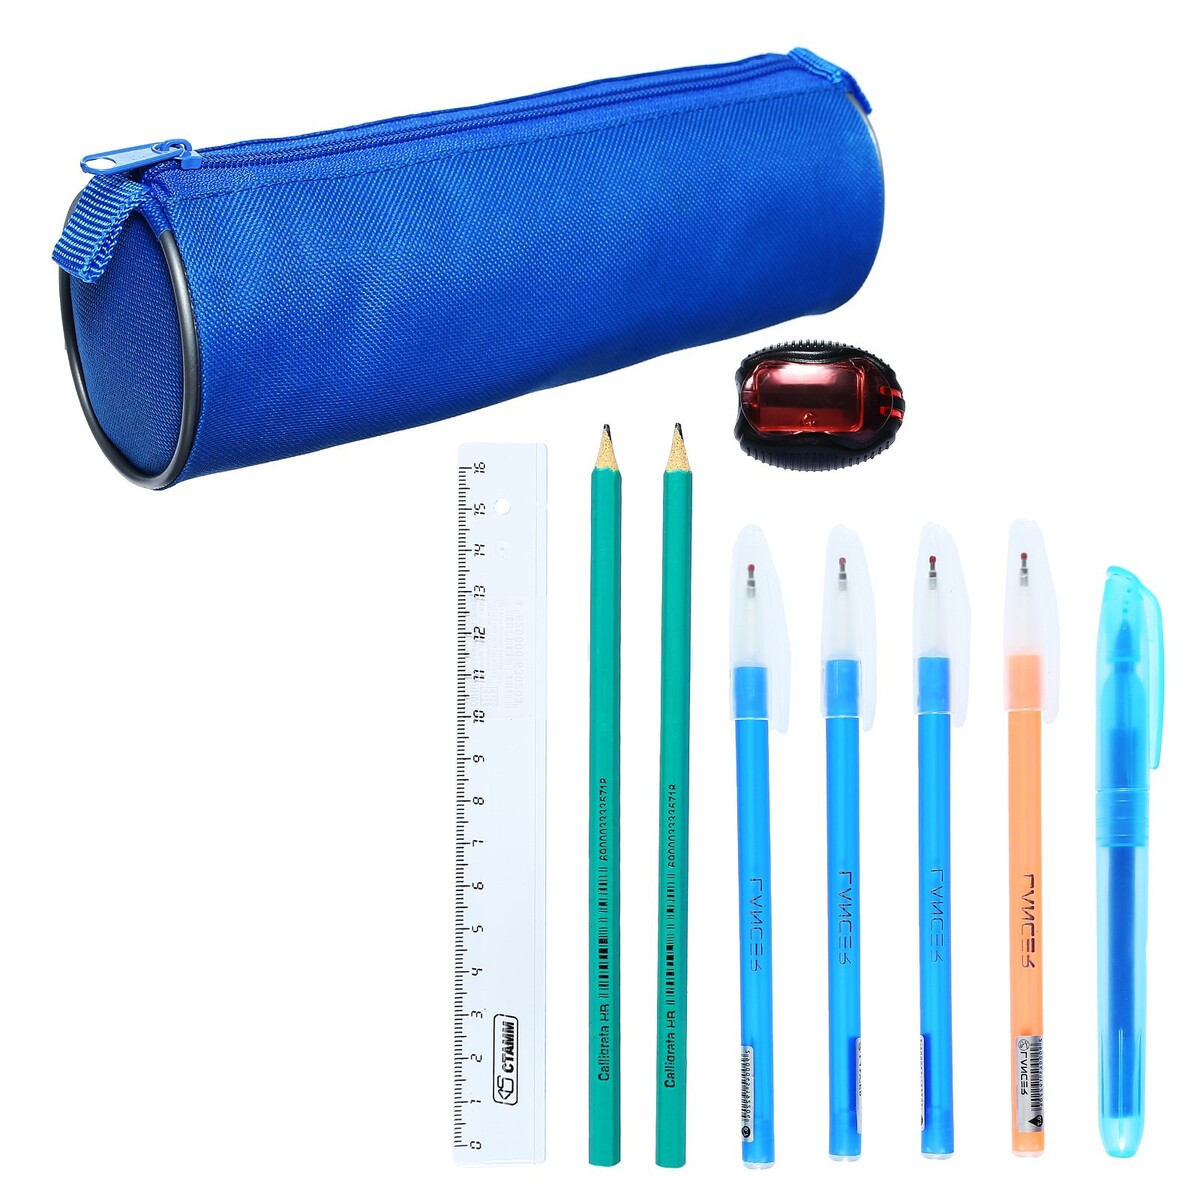 Набор канцелярский 10 предметов (пенал-тубус 65 х 210 мм, ручки 4 штуки цвет синий , линейка 15 см, точилка, карандаш 2 штуки, текстовыделитель), синий карандаш ч гр милитари синий